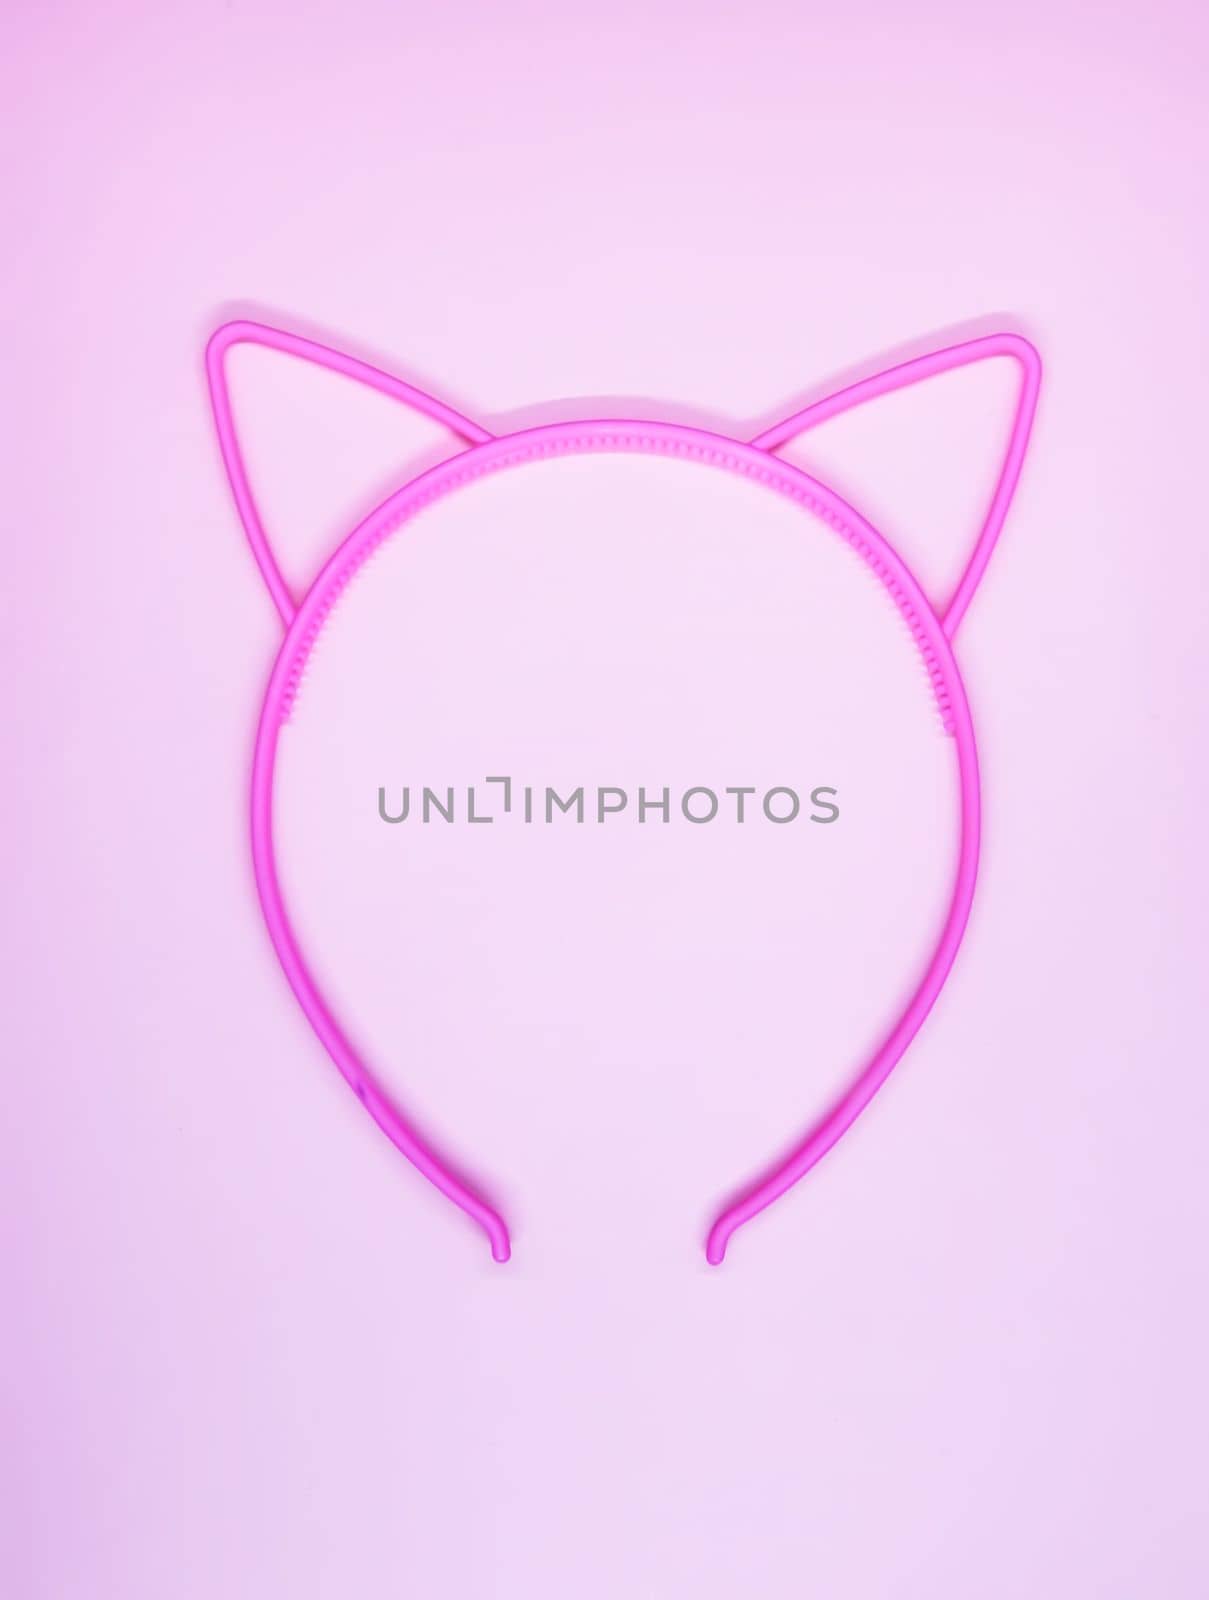 Pink plastic hoop with cute ears for hair.